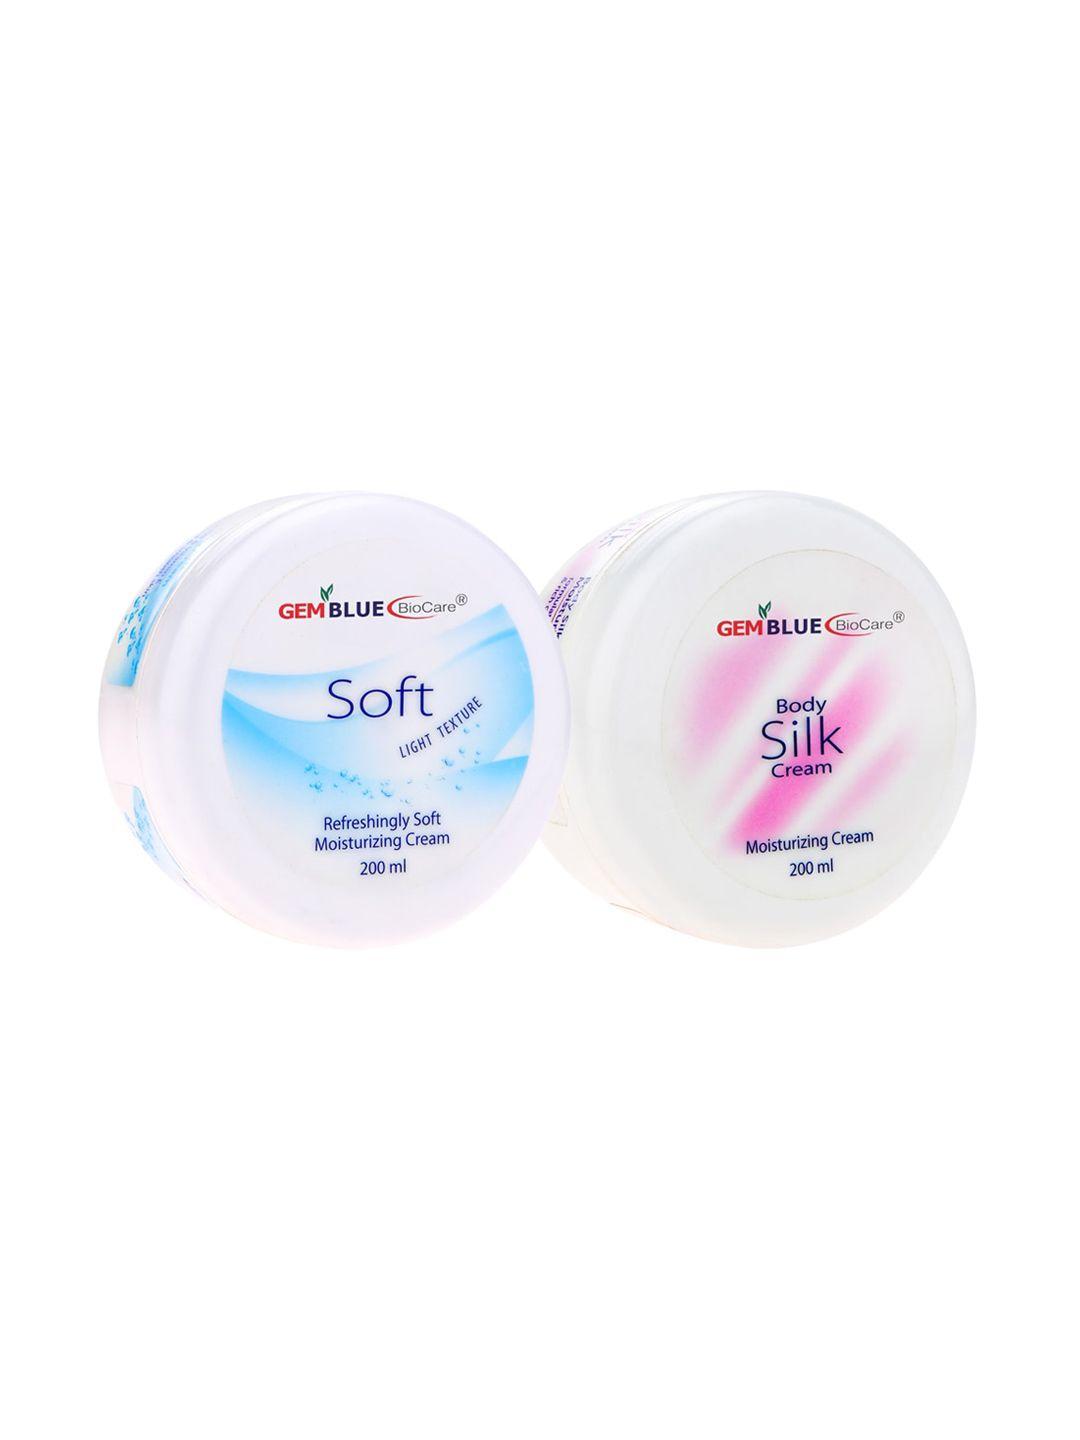 gemblue biocare unisex set of light texture & body silk day creams